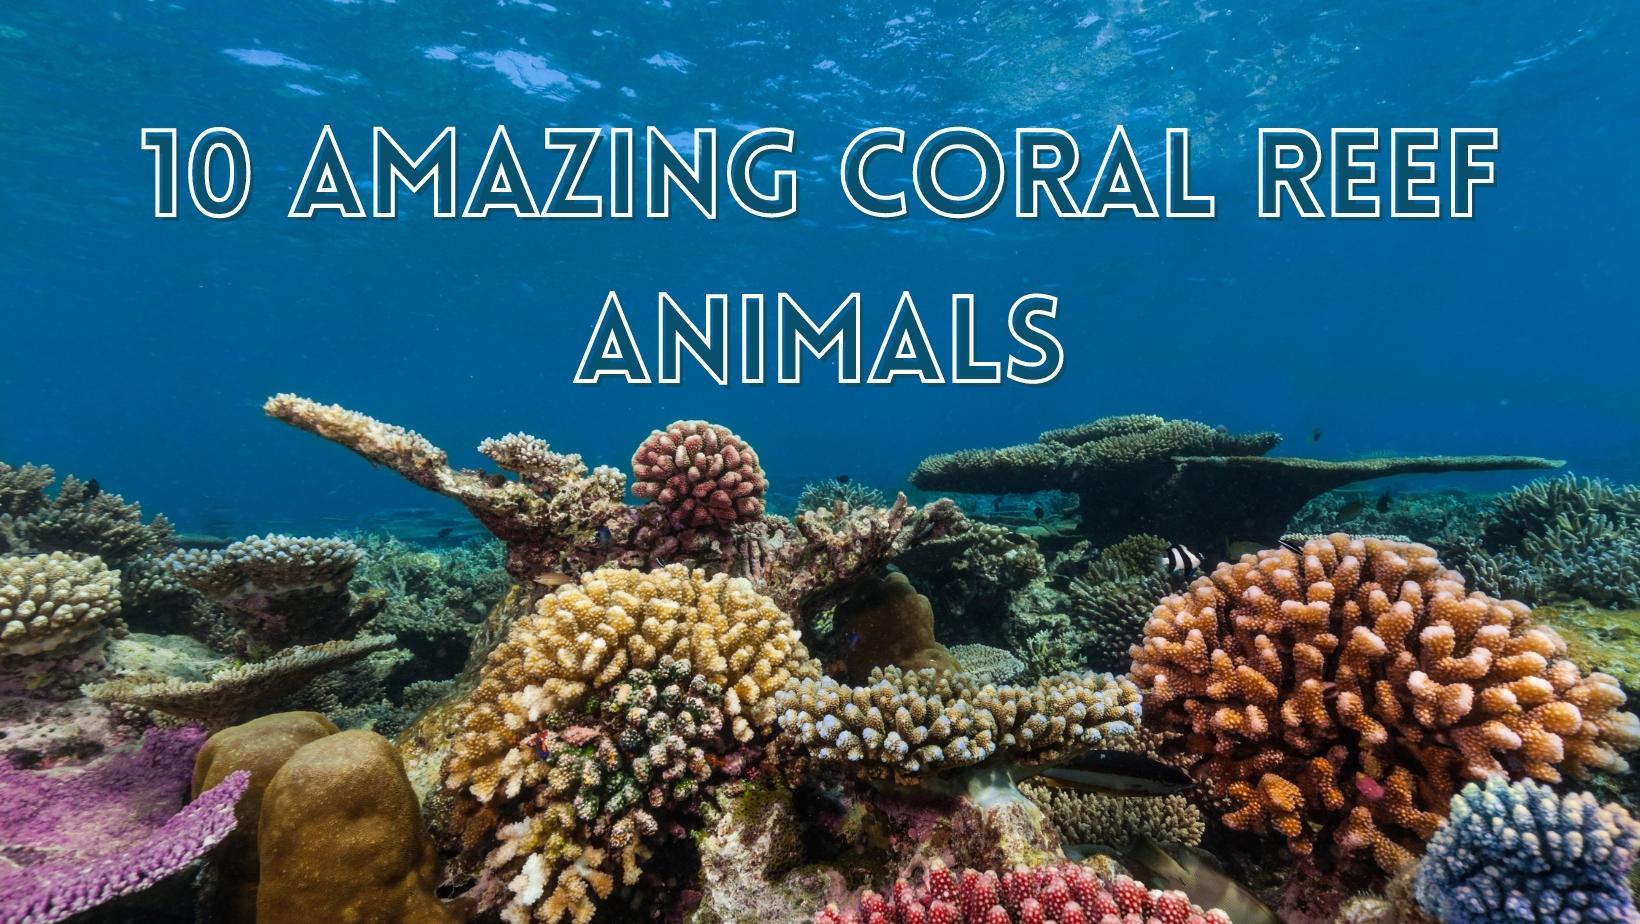 Interesting coral reef animals